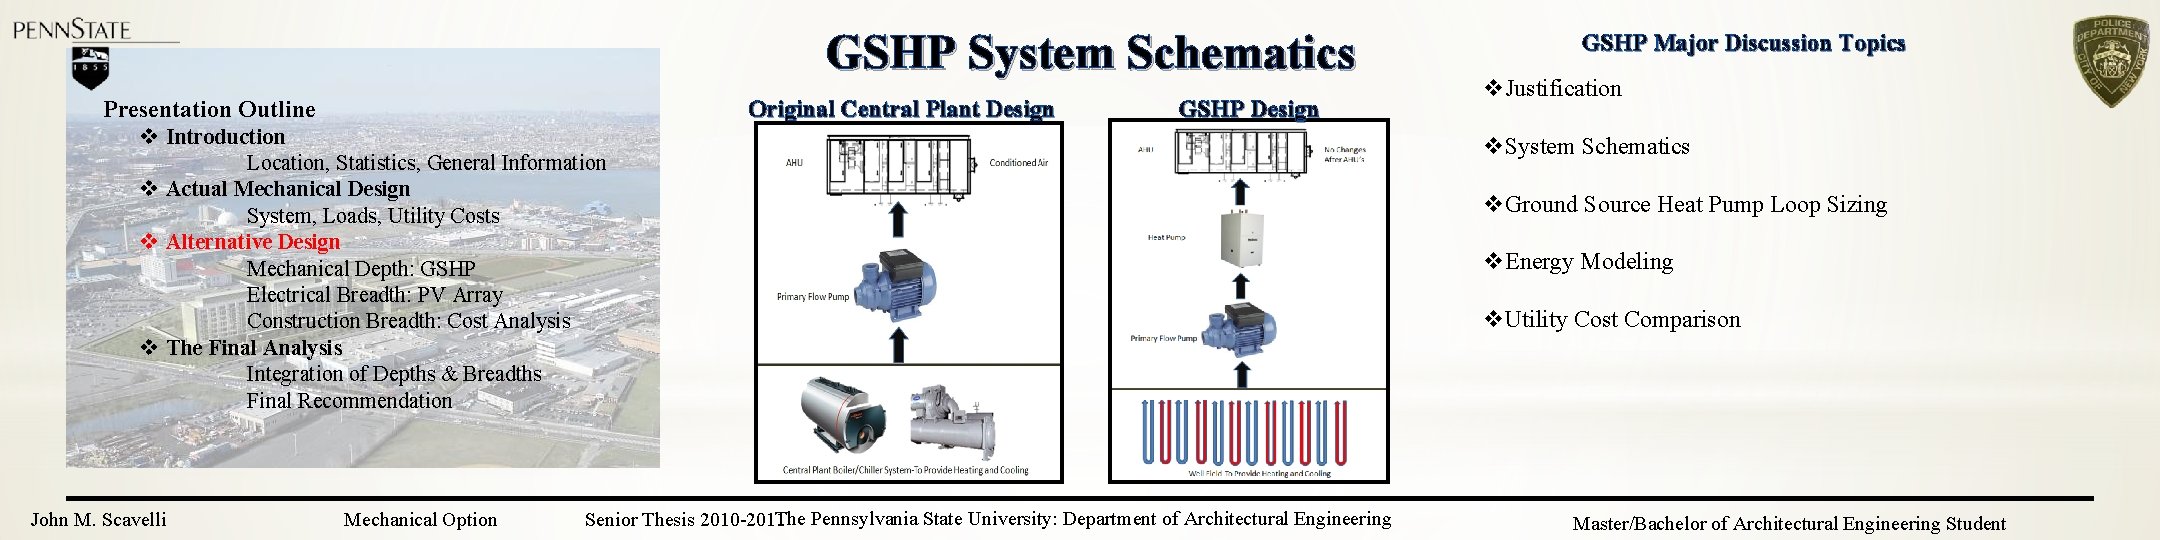 GSHP System Schematics Presentation Outline Original Central Plant Design GSHP Design v Introduction Location,